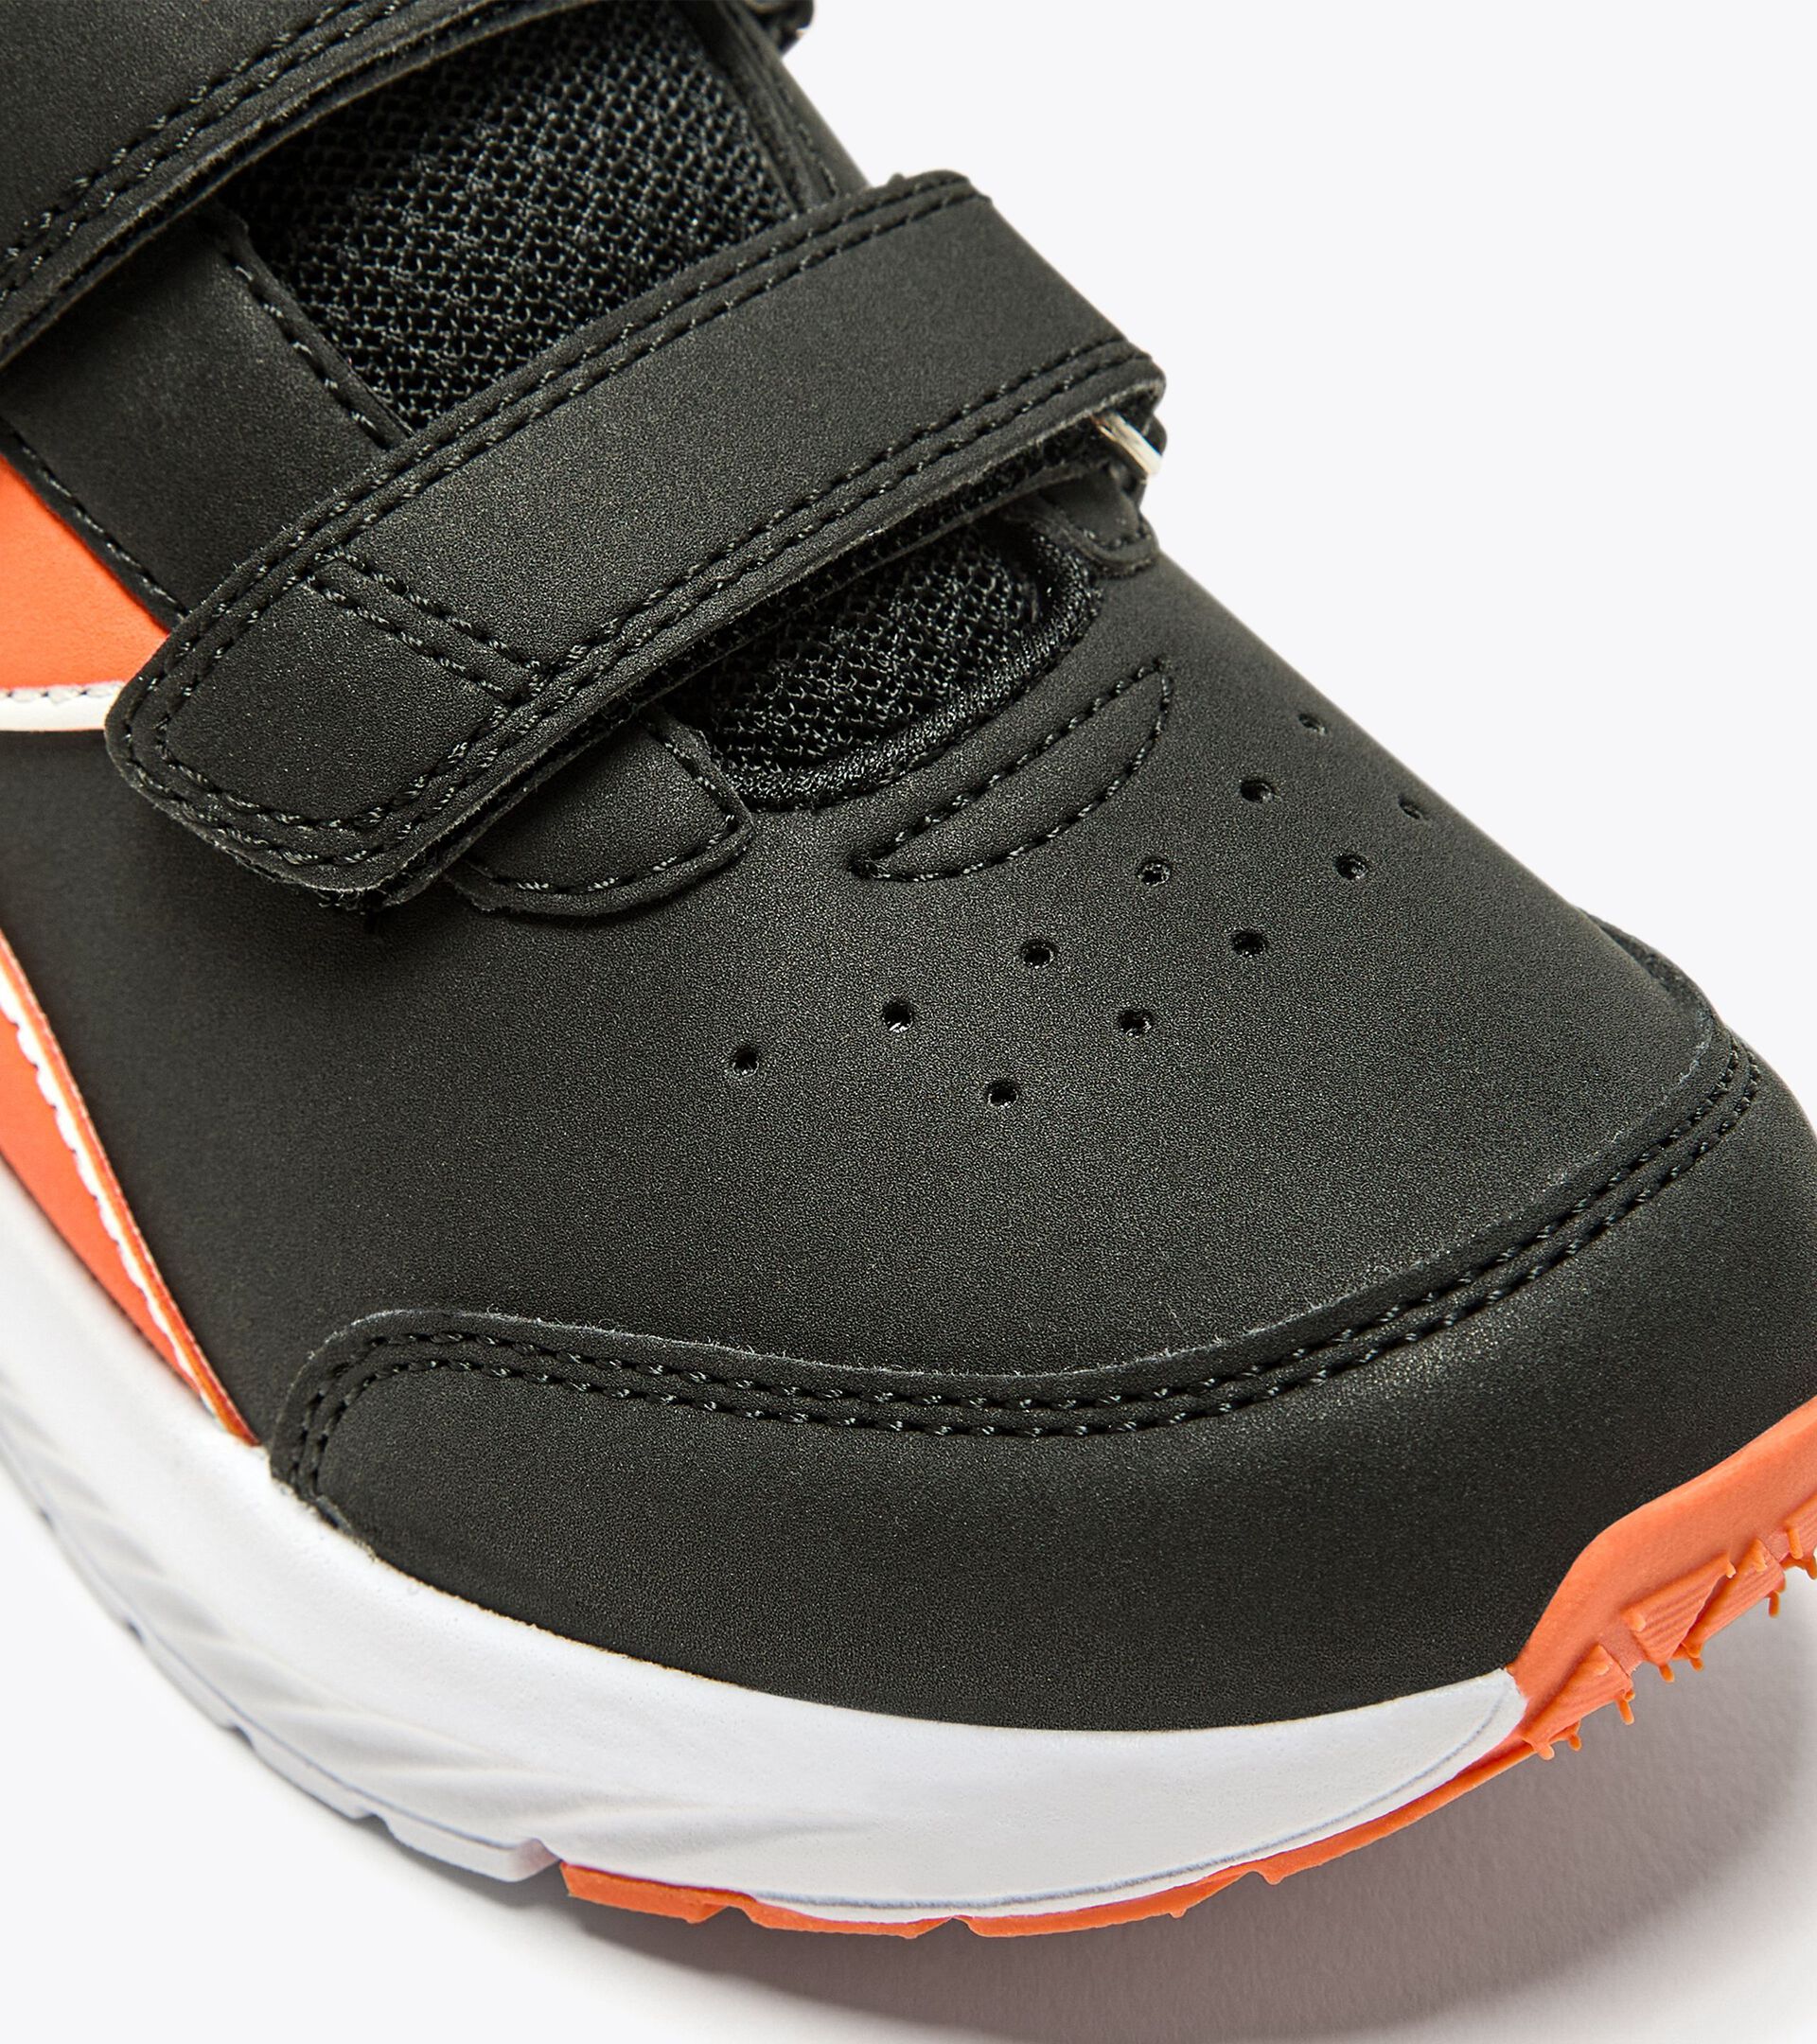 Sports shoe fod kids - 4 to 8 years - Gender Neutral FALCON 3 SL JR V BLACK/VERMILLION ORANGE - Diadora